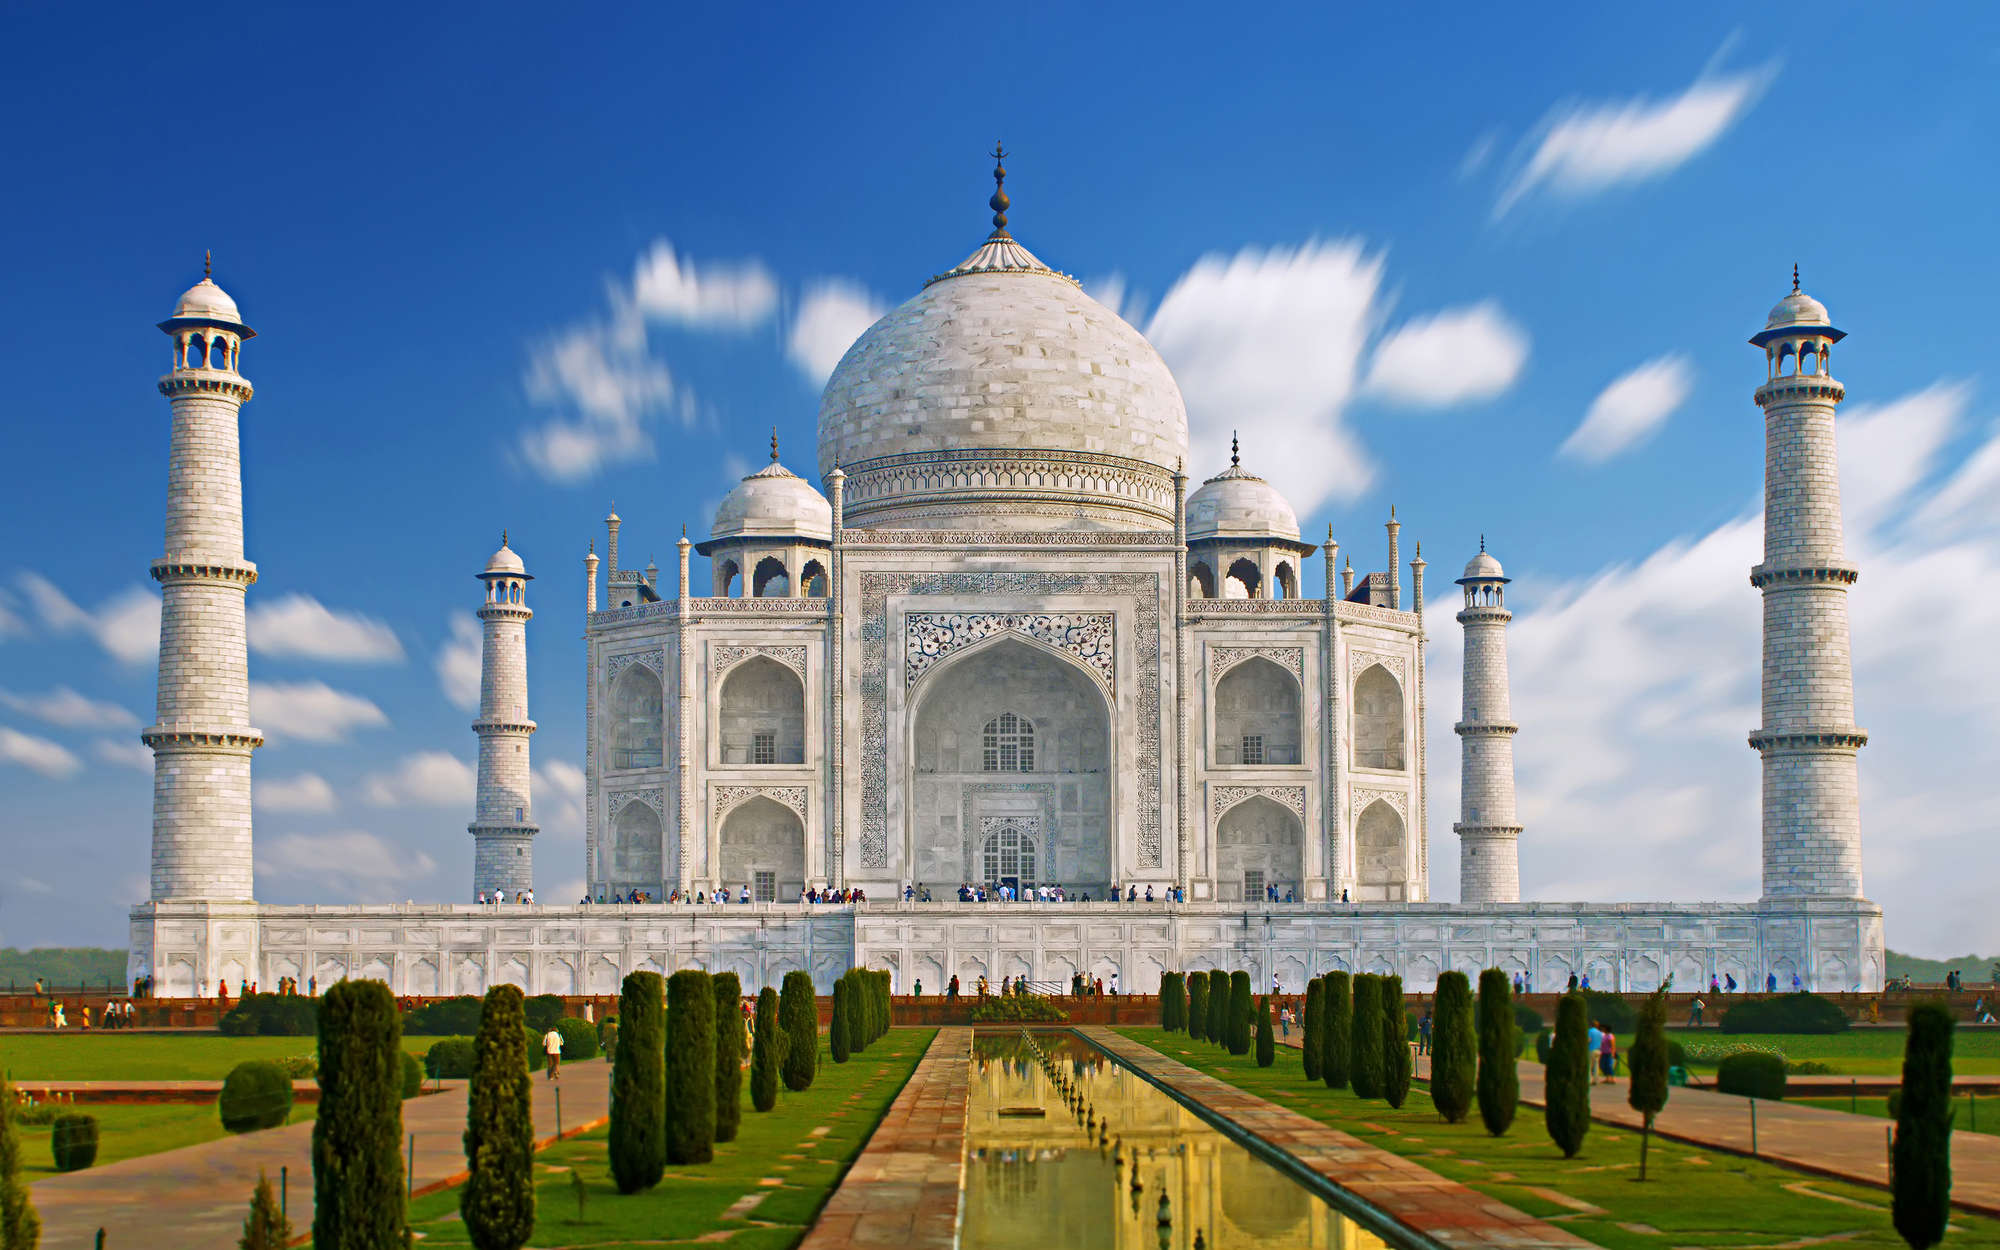             Fototapete Taj Mahal in der Türkei – Premium Glattvlies
        